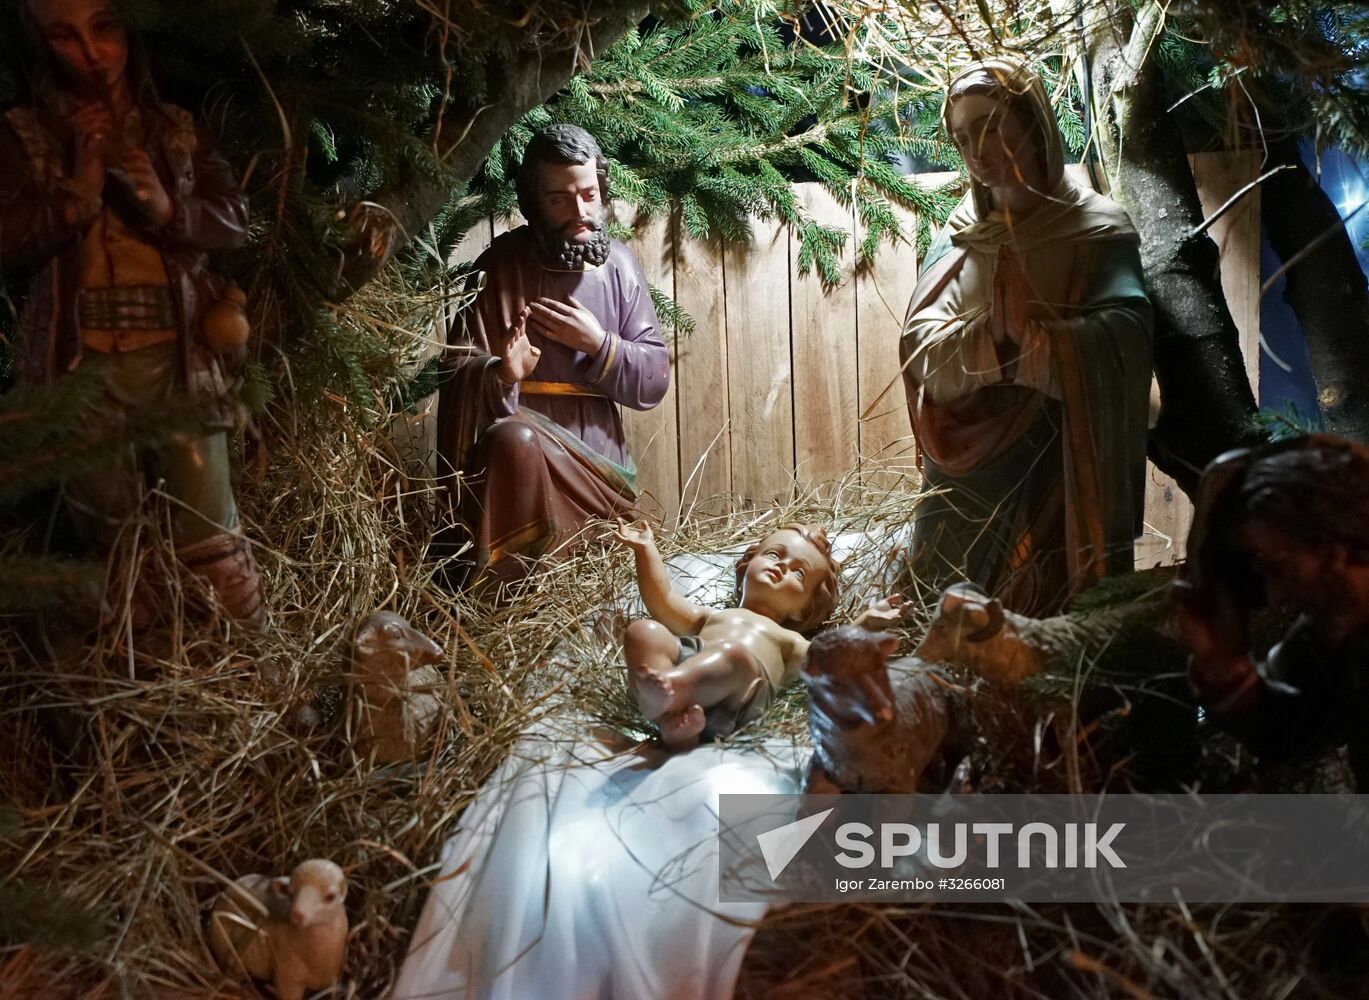 Catholic Christmas celebrations in Russia